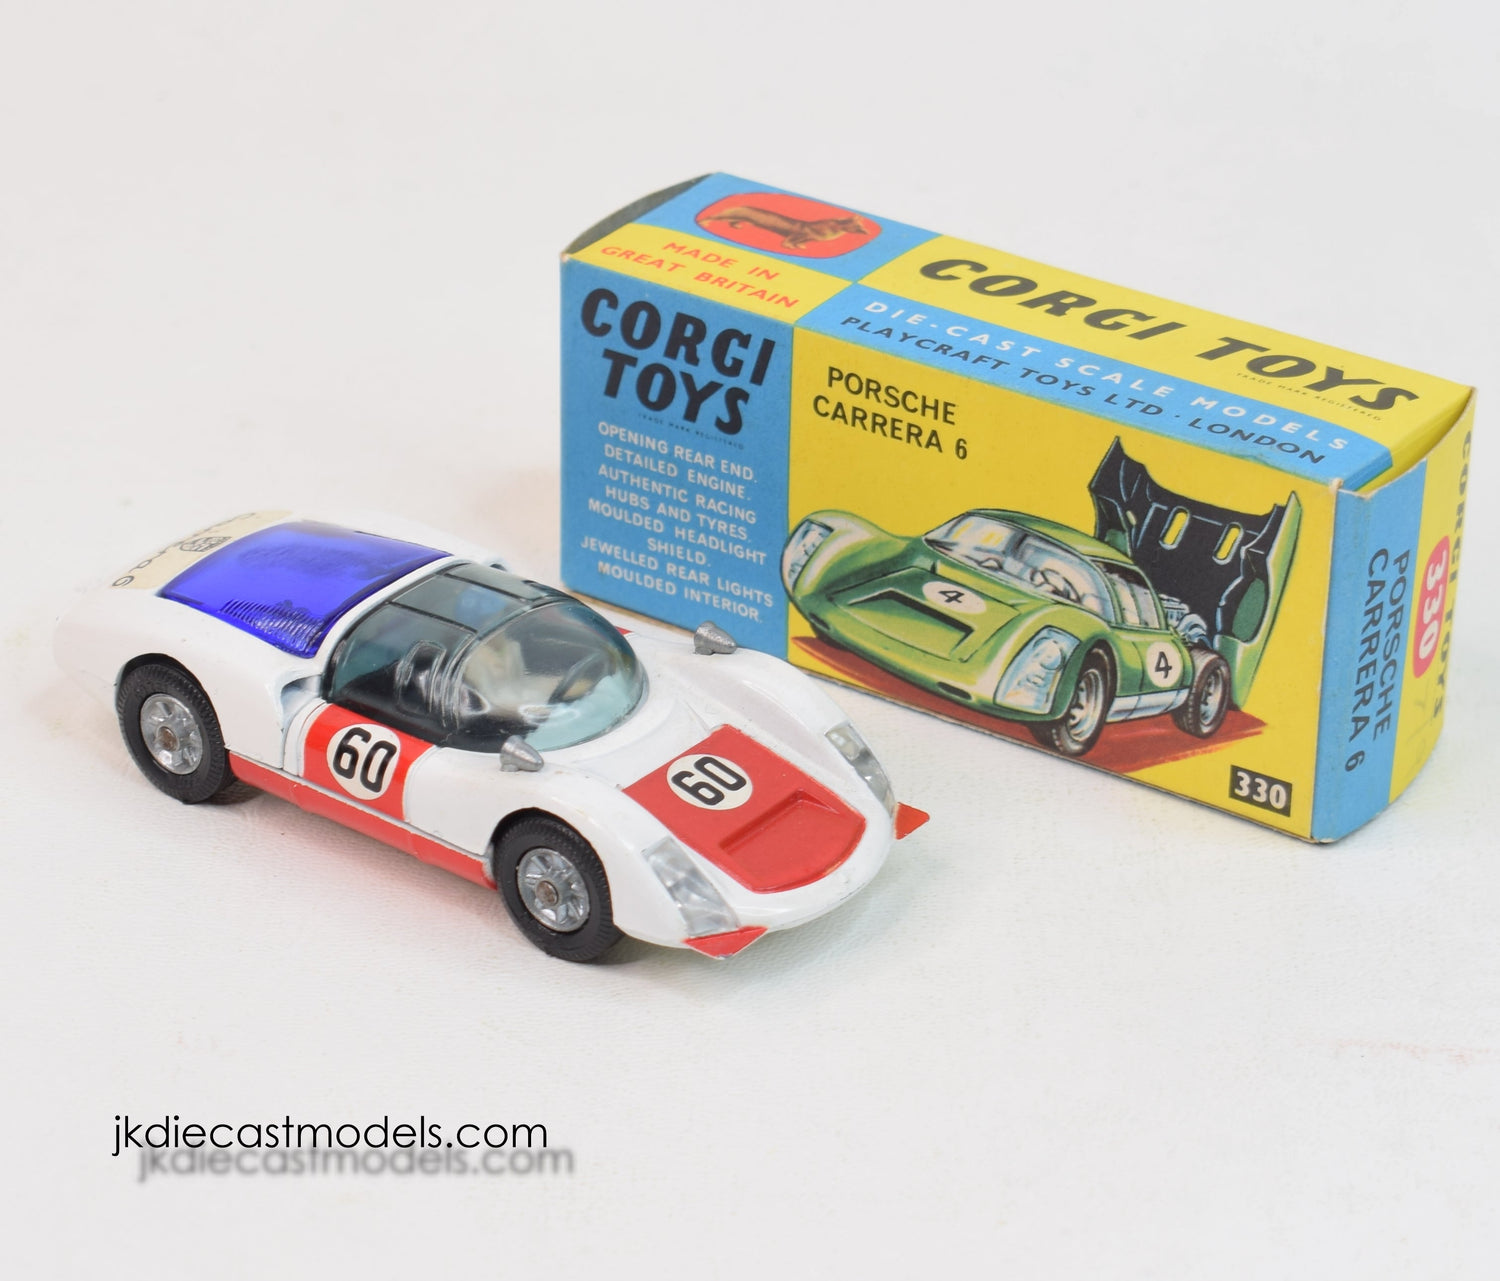 Corgi Toys 330 Porsche Virtually Mint/Nice box (blue canopy)